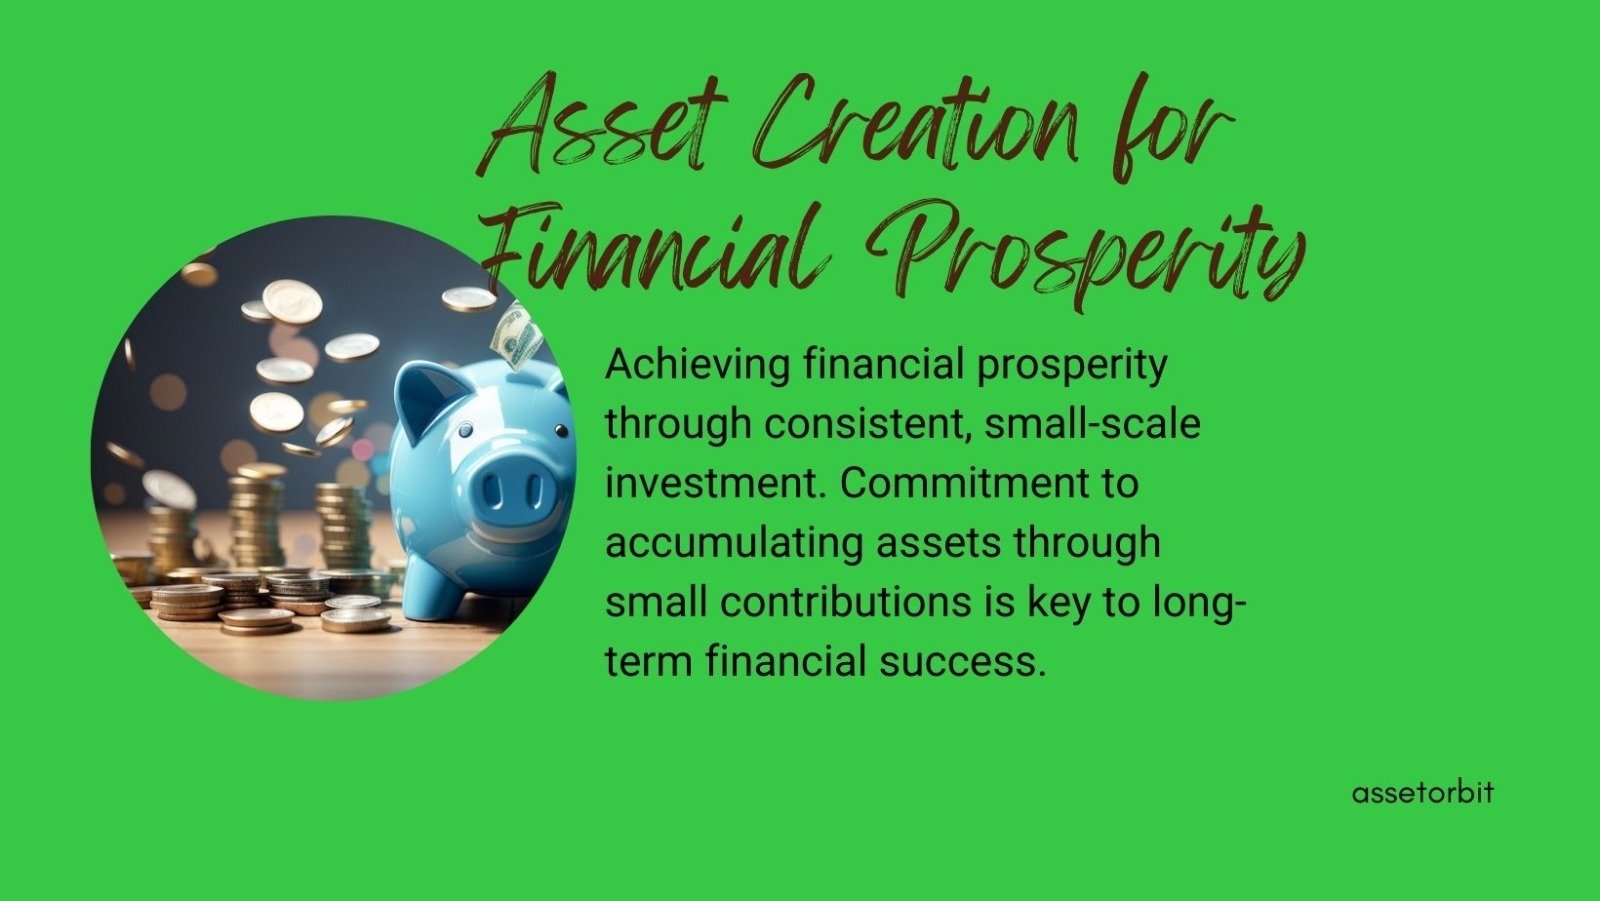 Asset Creation for Financial Prosperity